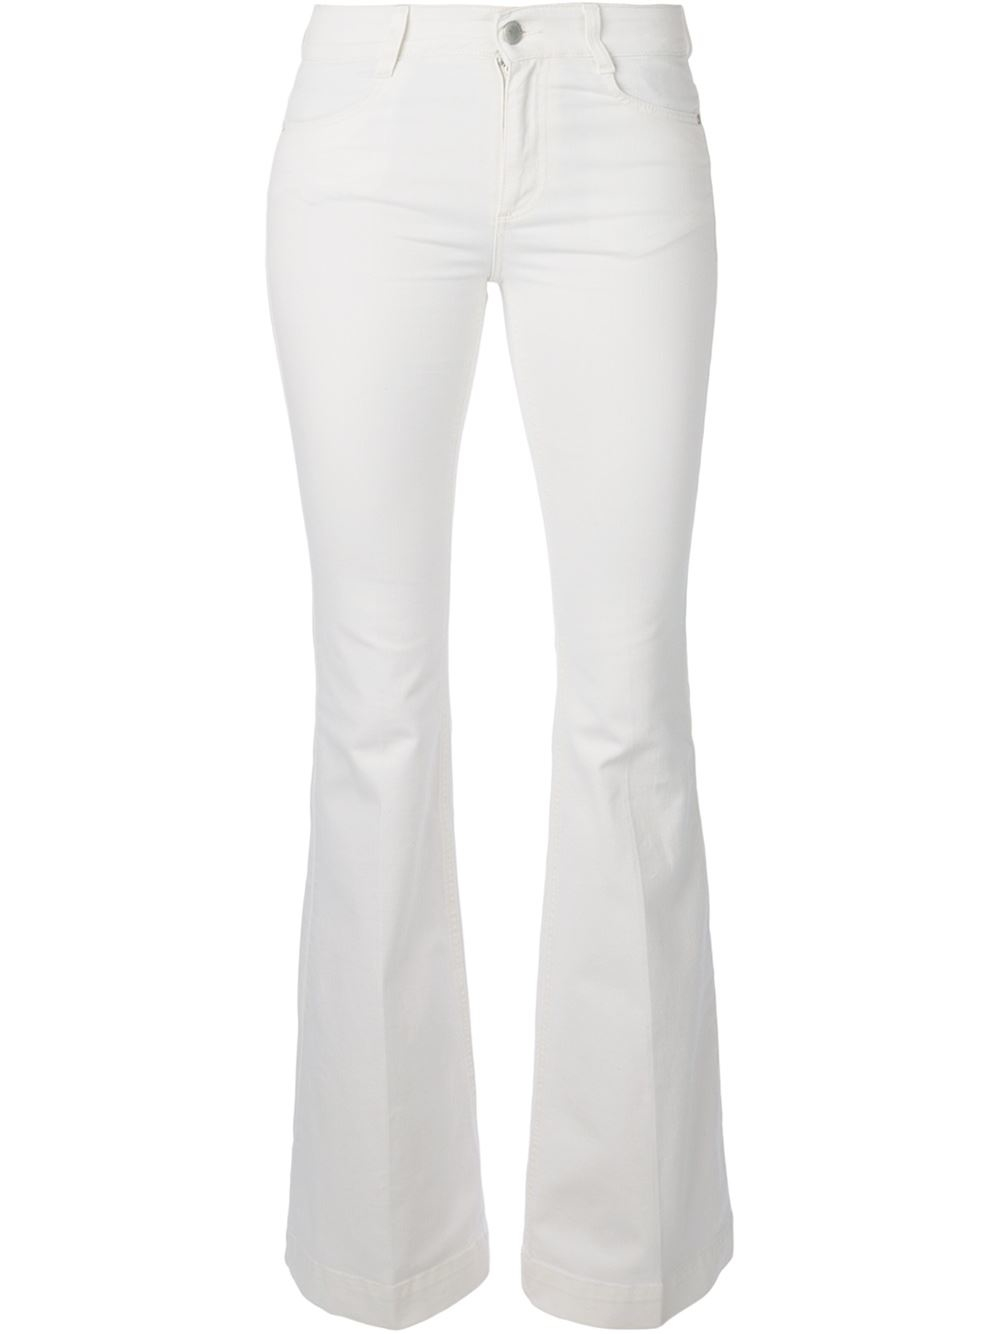 Lyst - Stella Mccartney '70's Flare' Jeans in White